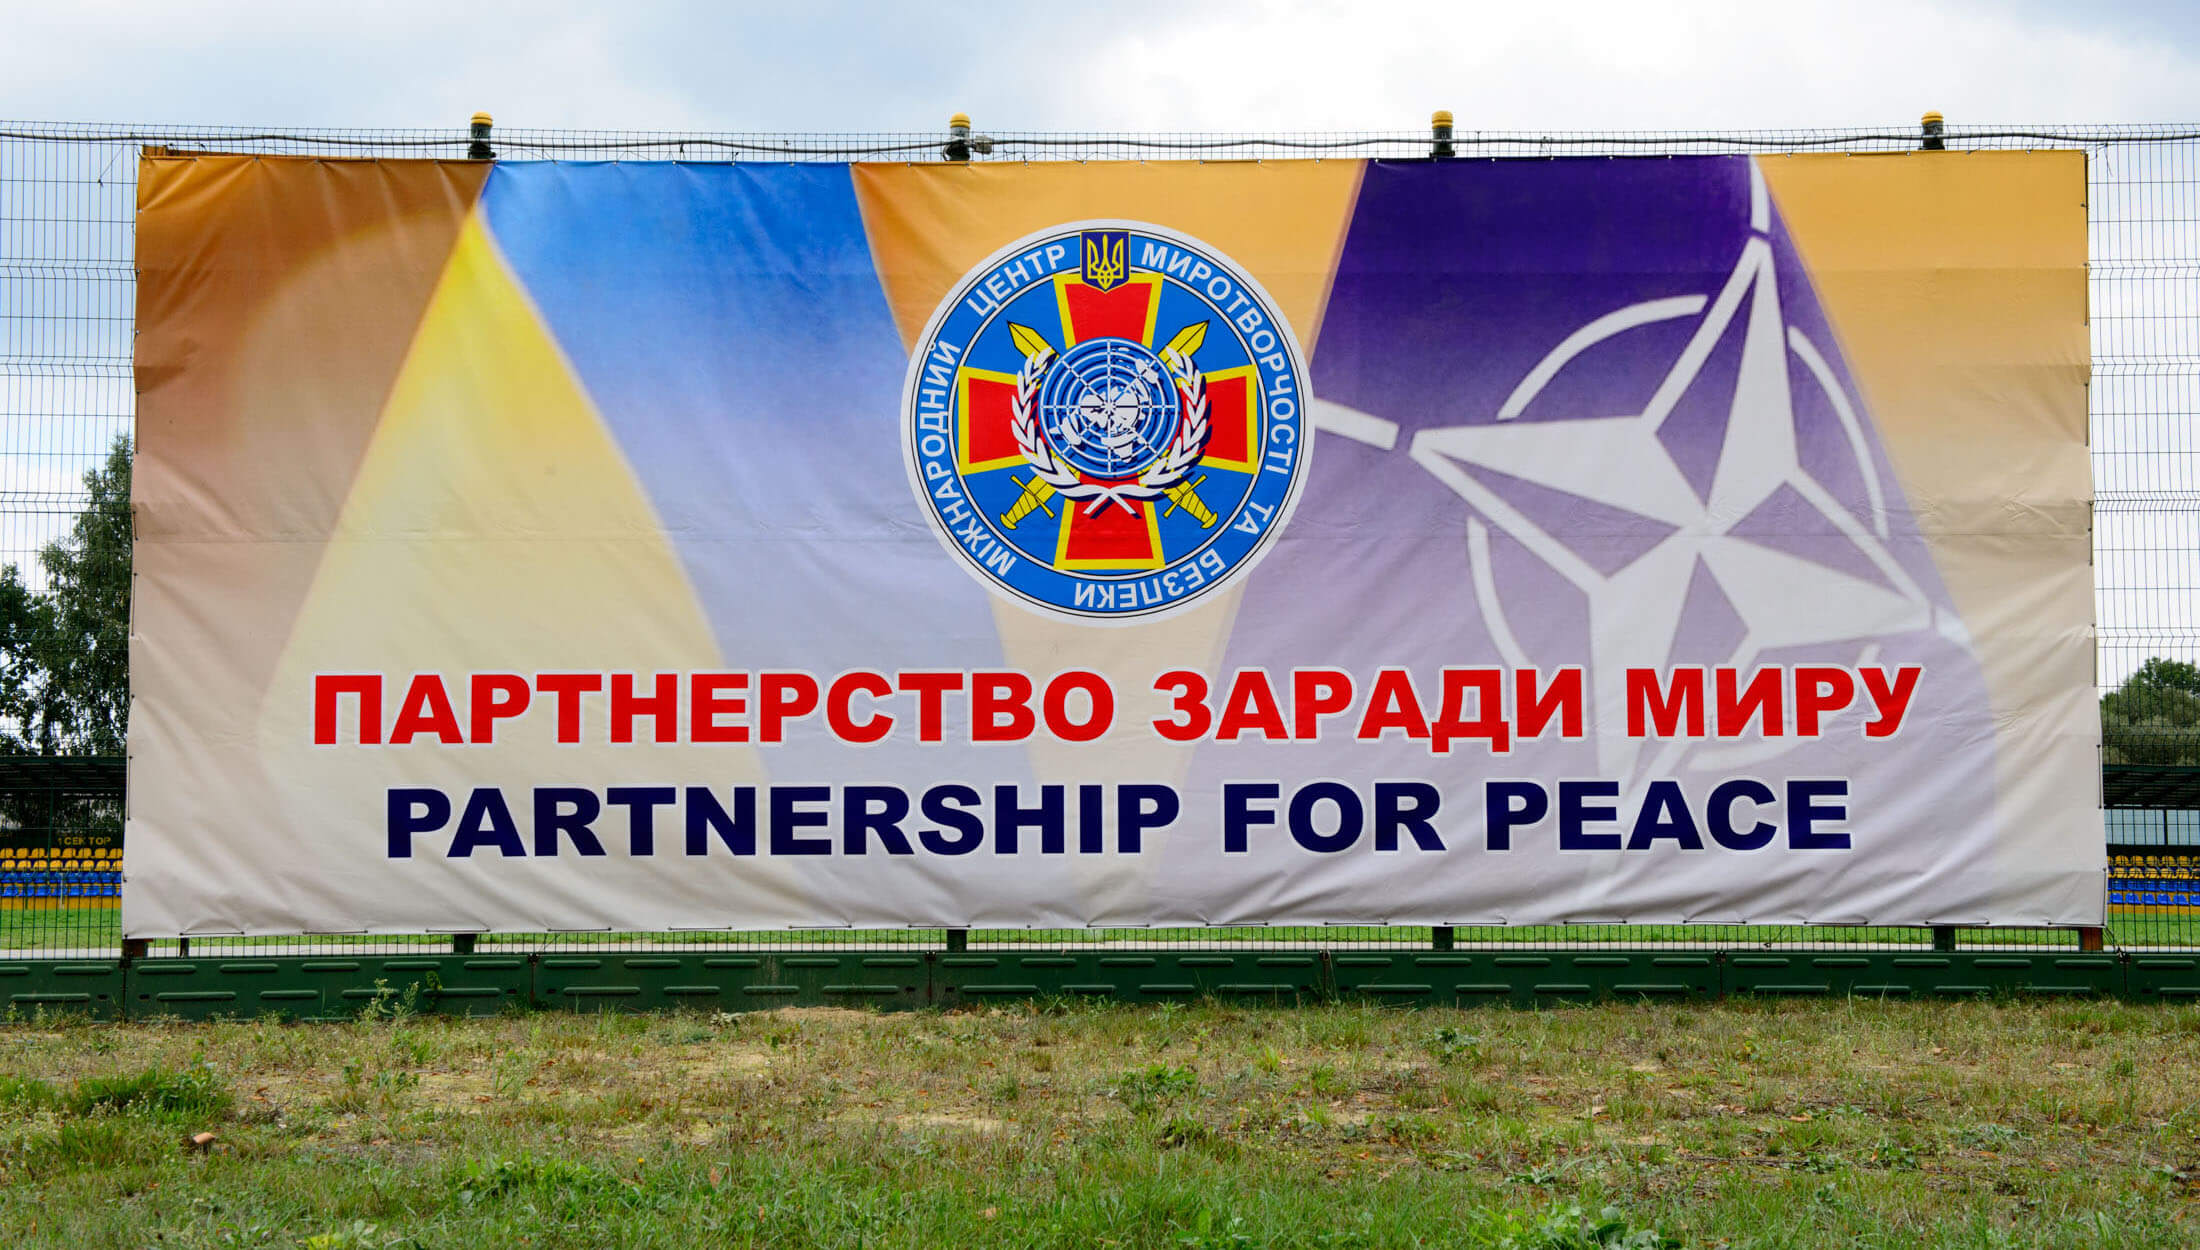 NATO Exercise in Ukraine, 2015. © NATO / Flickr